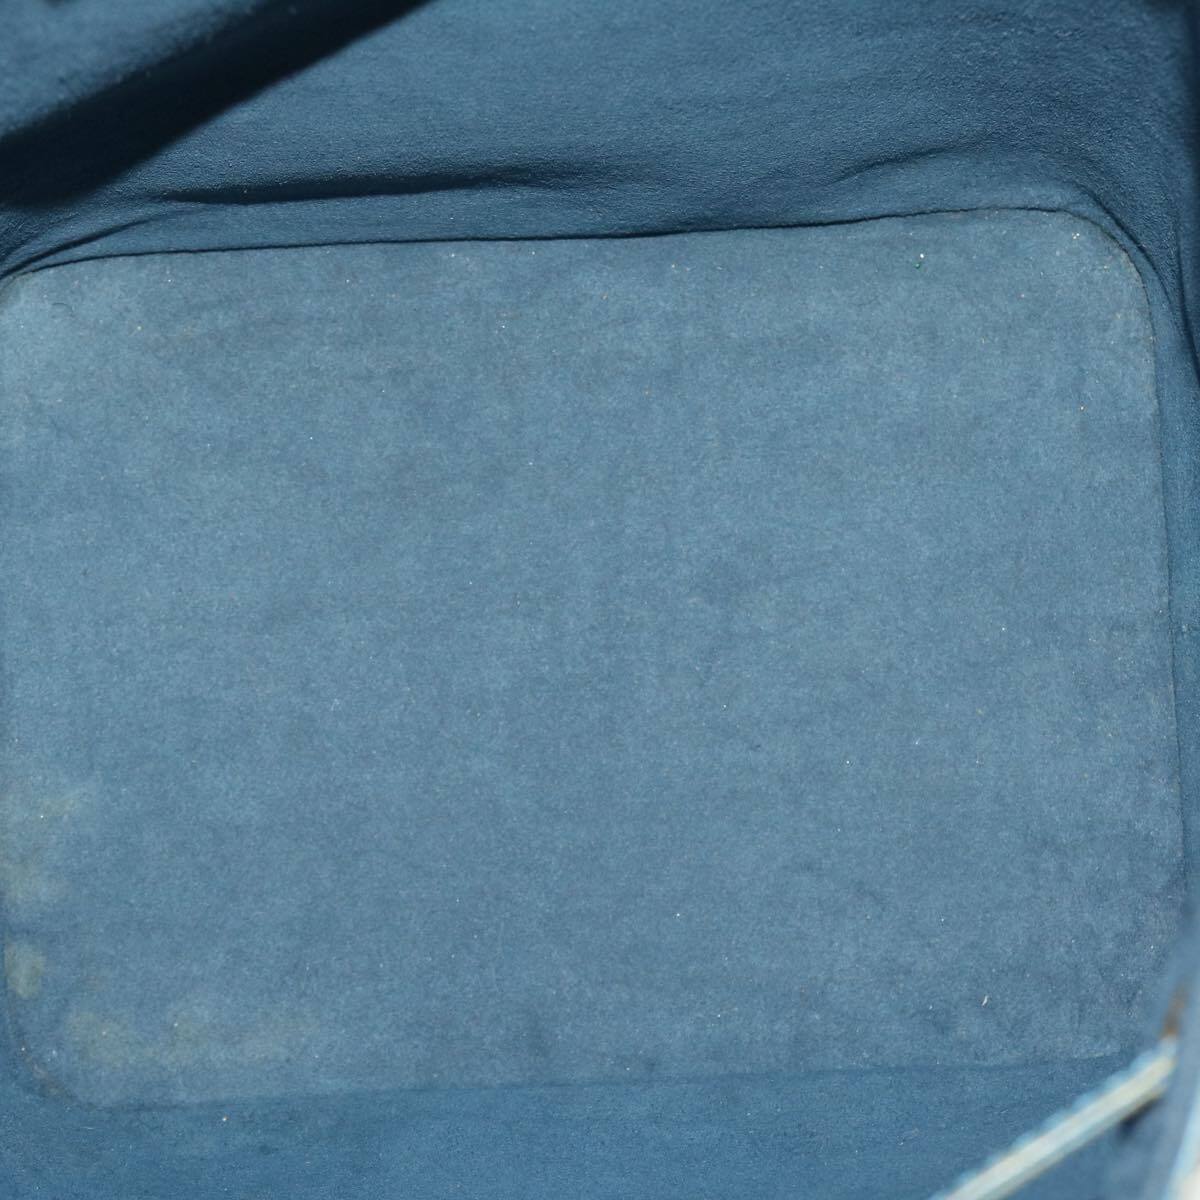 Louis Vuitton Petite Noe Epi Toledo Blue M44105